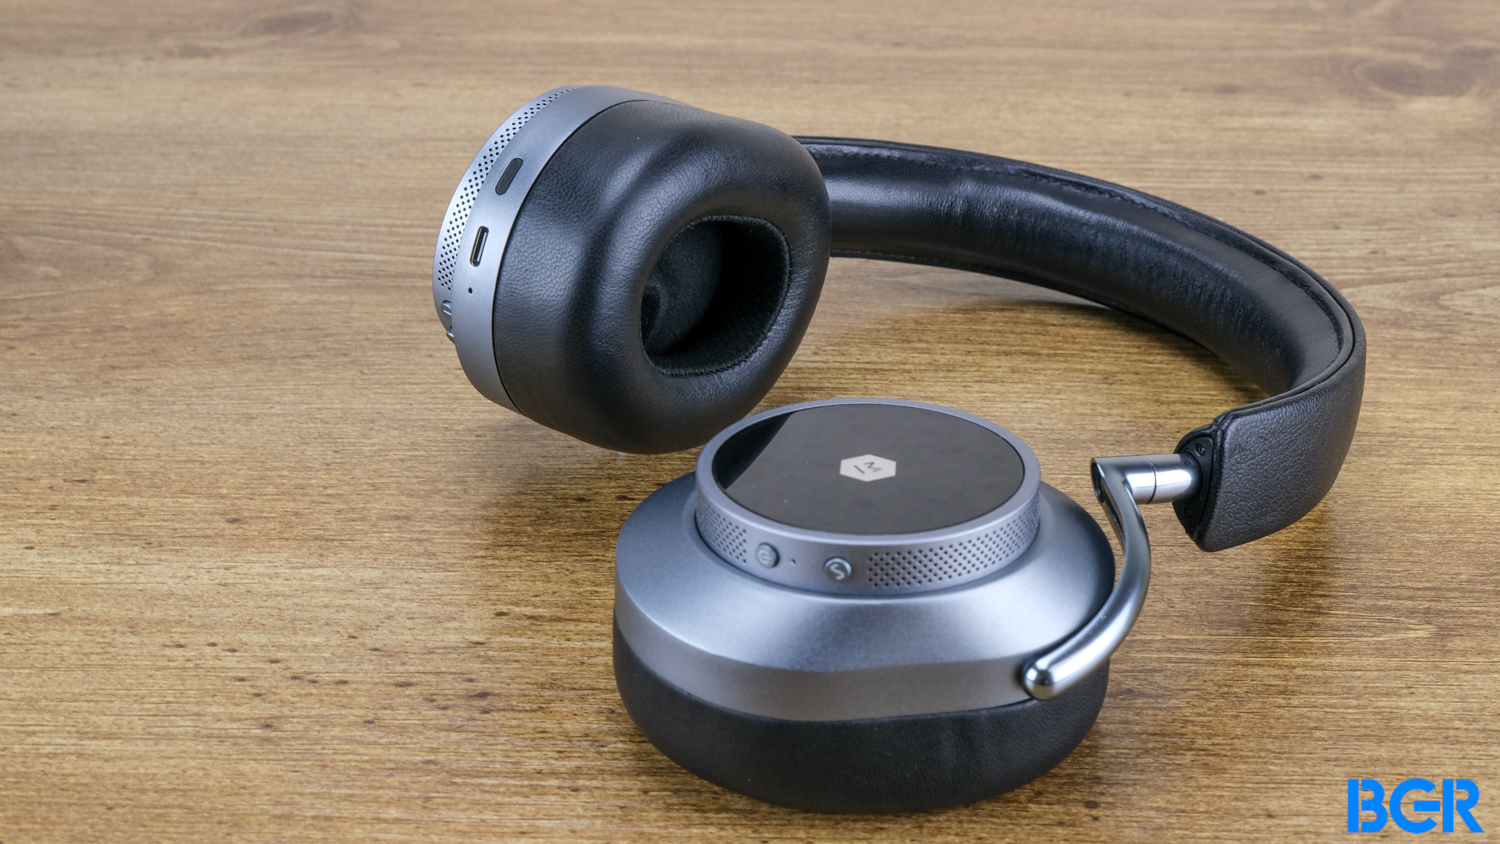 Master & Dynamic MW75 headphones review: Premium sound, premium price